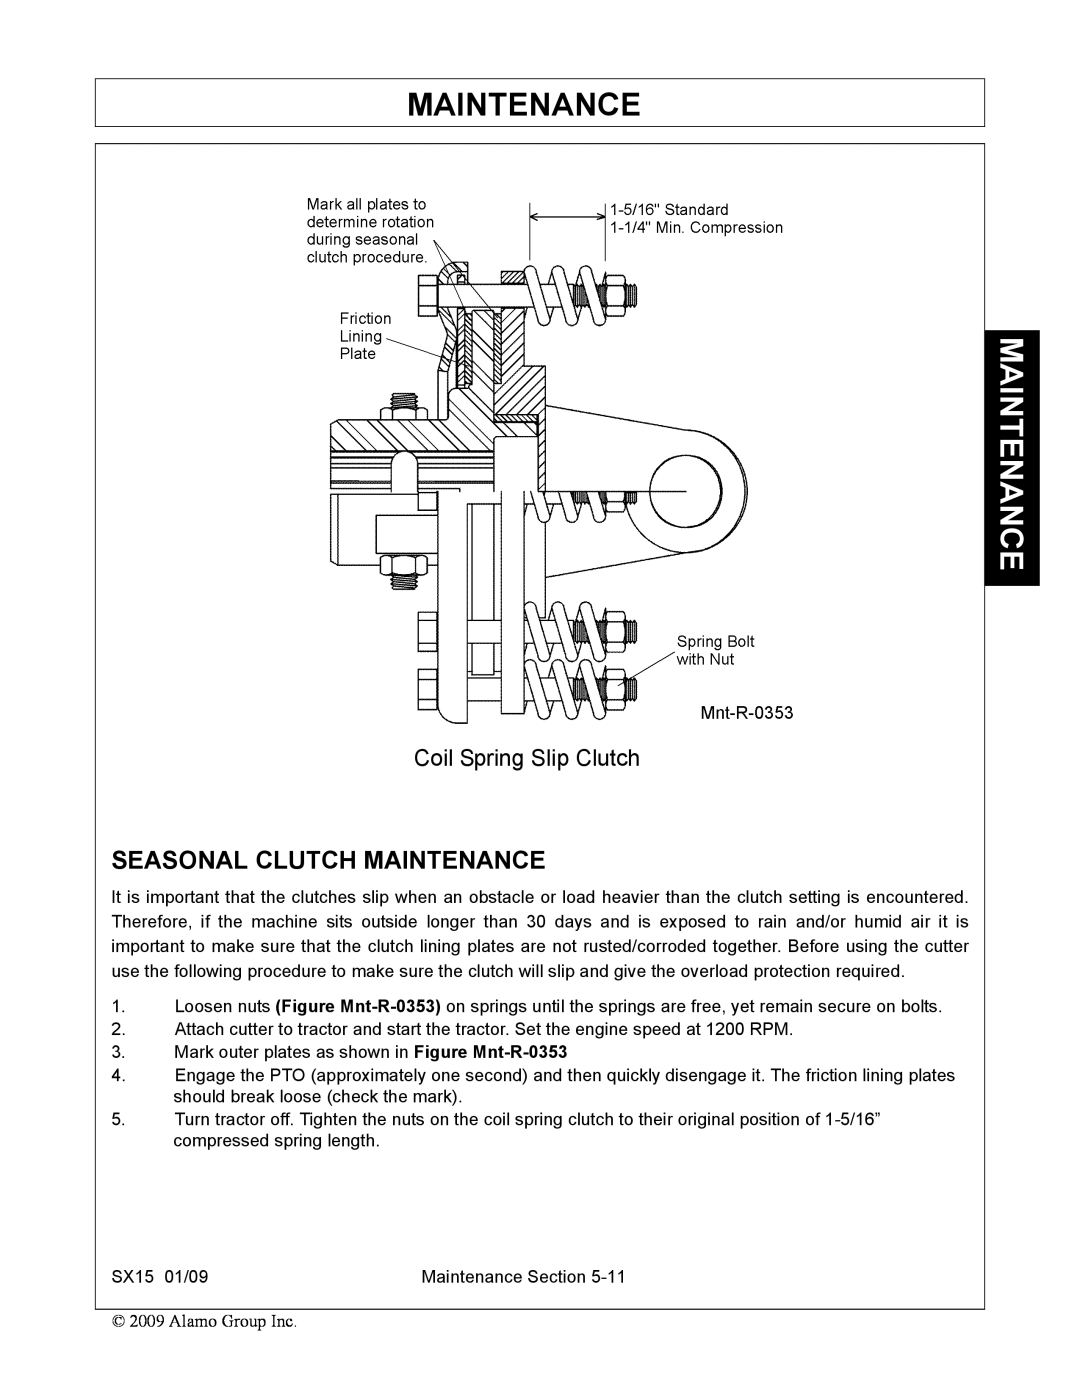 Alamo SX15 manual Seasonal Clutch Maintenance, Coil Spring Slip Clutch 